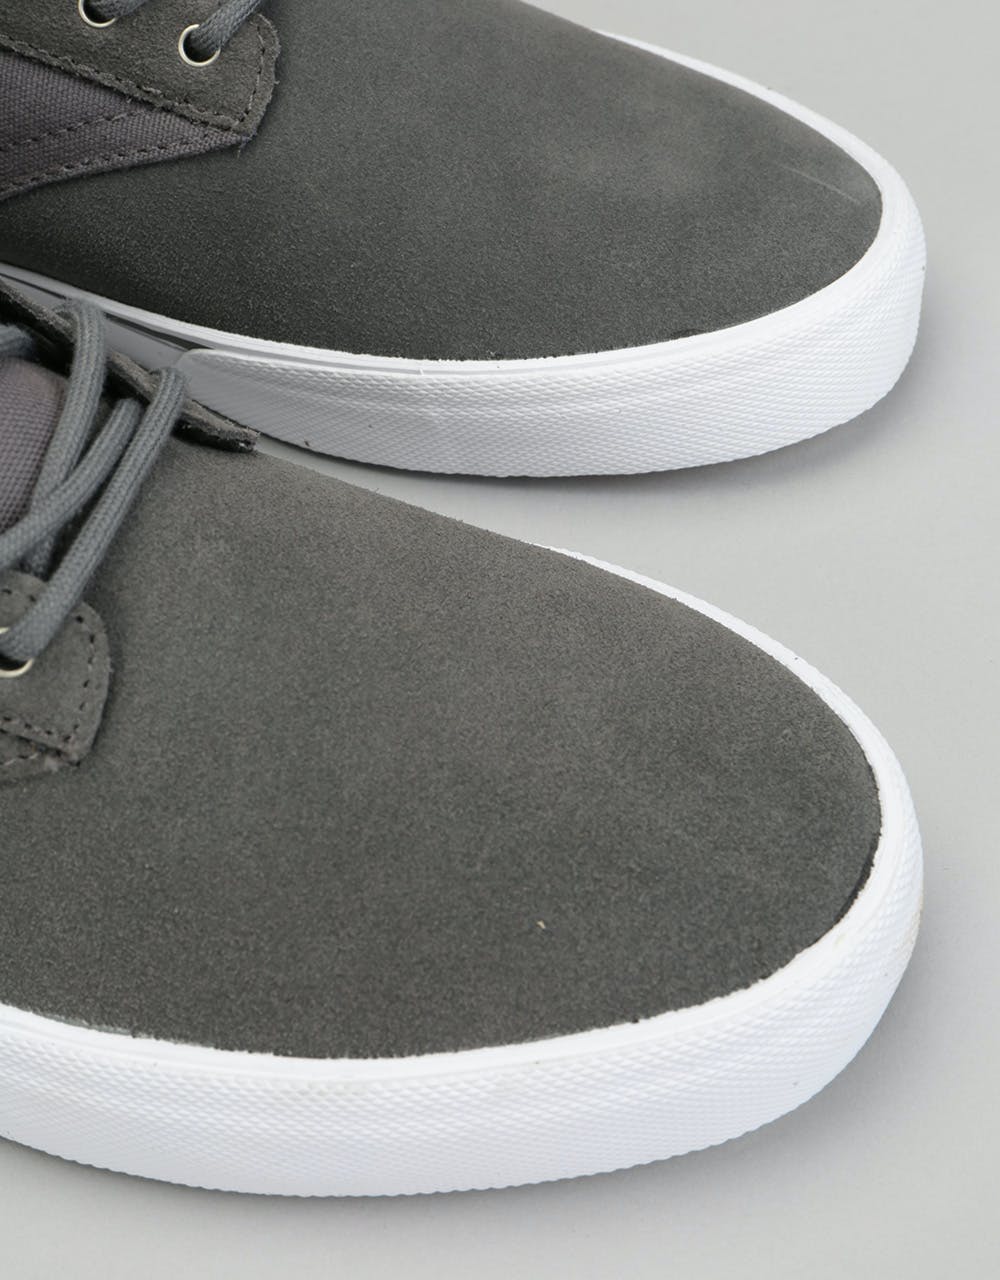 Etnies Jameson Vulc Skate Shoes - Grey/Brown